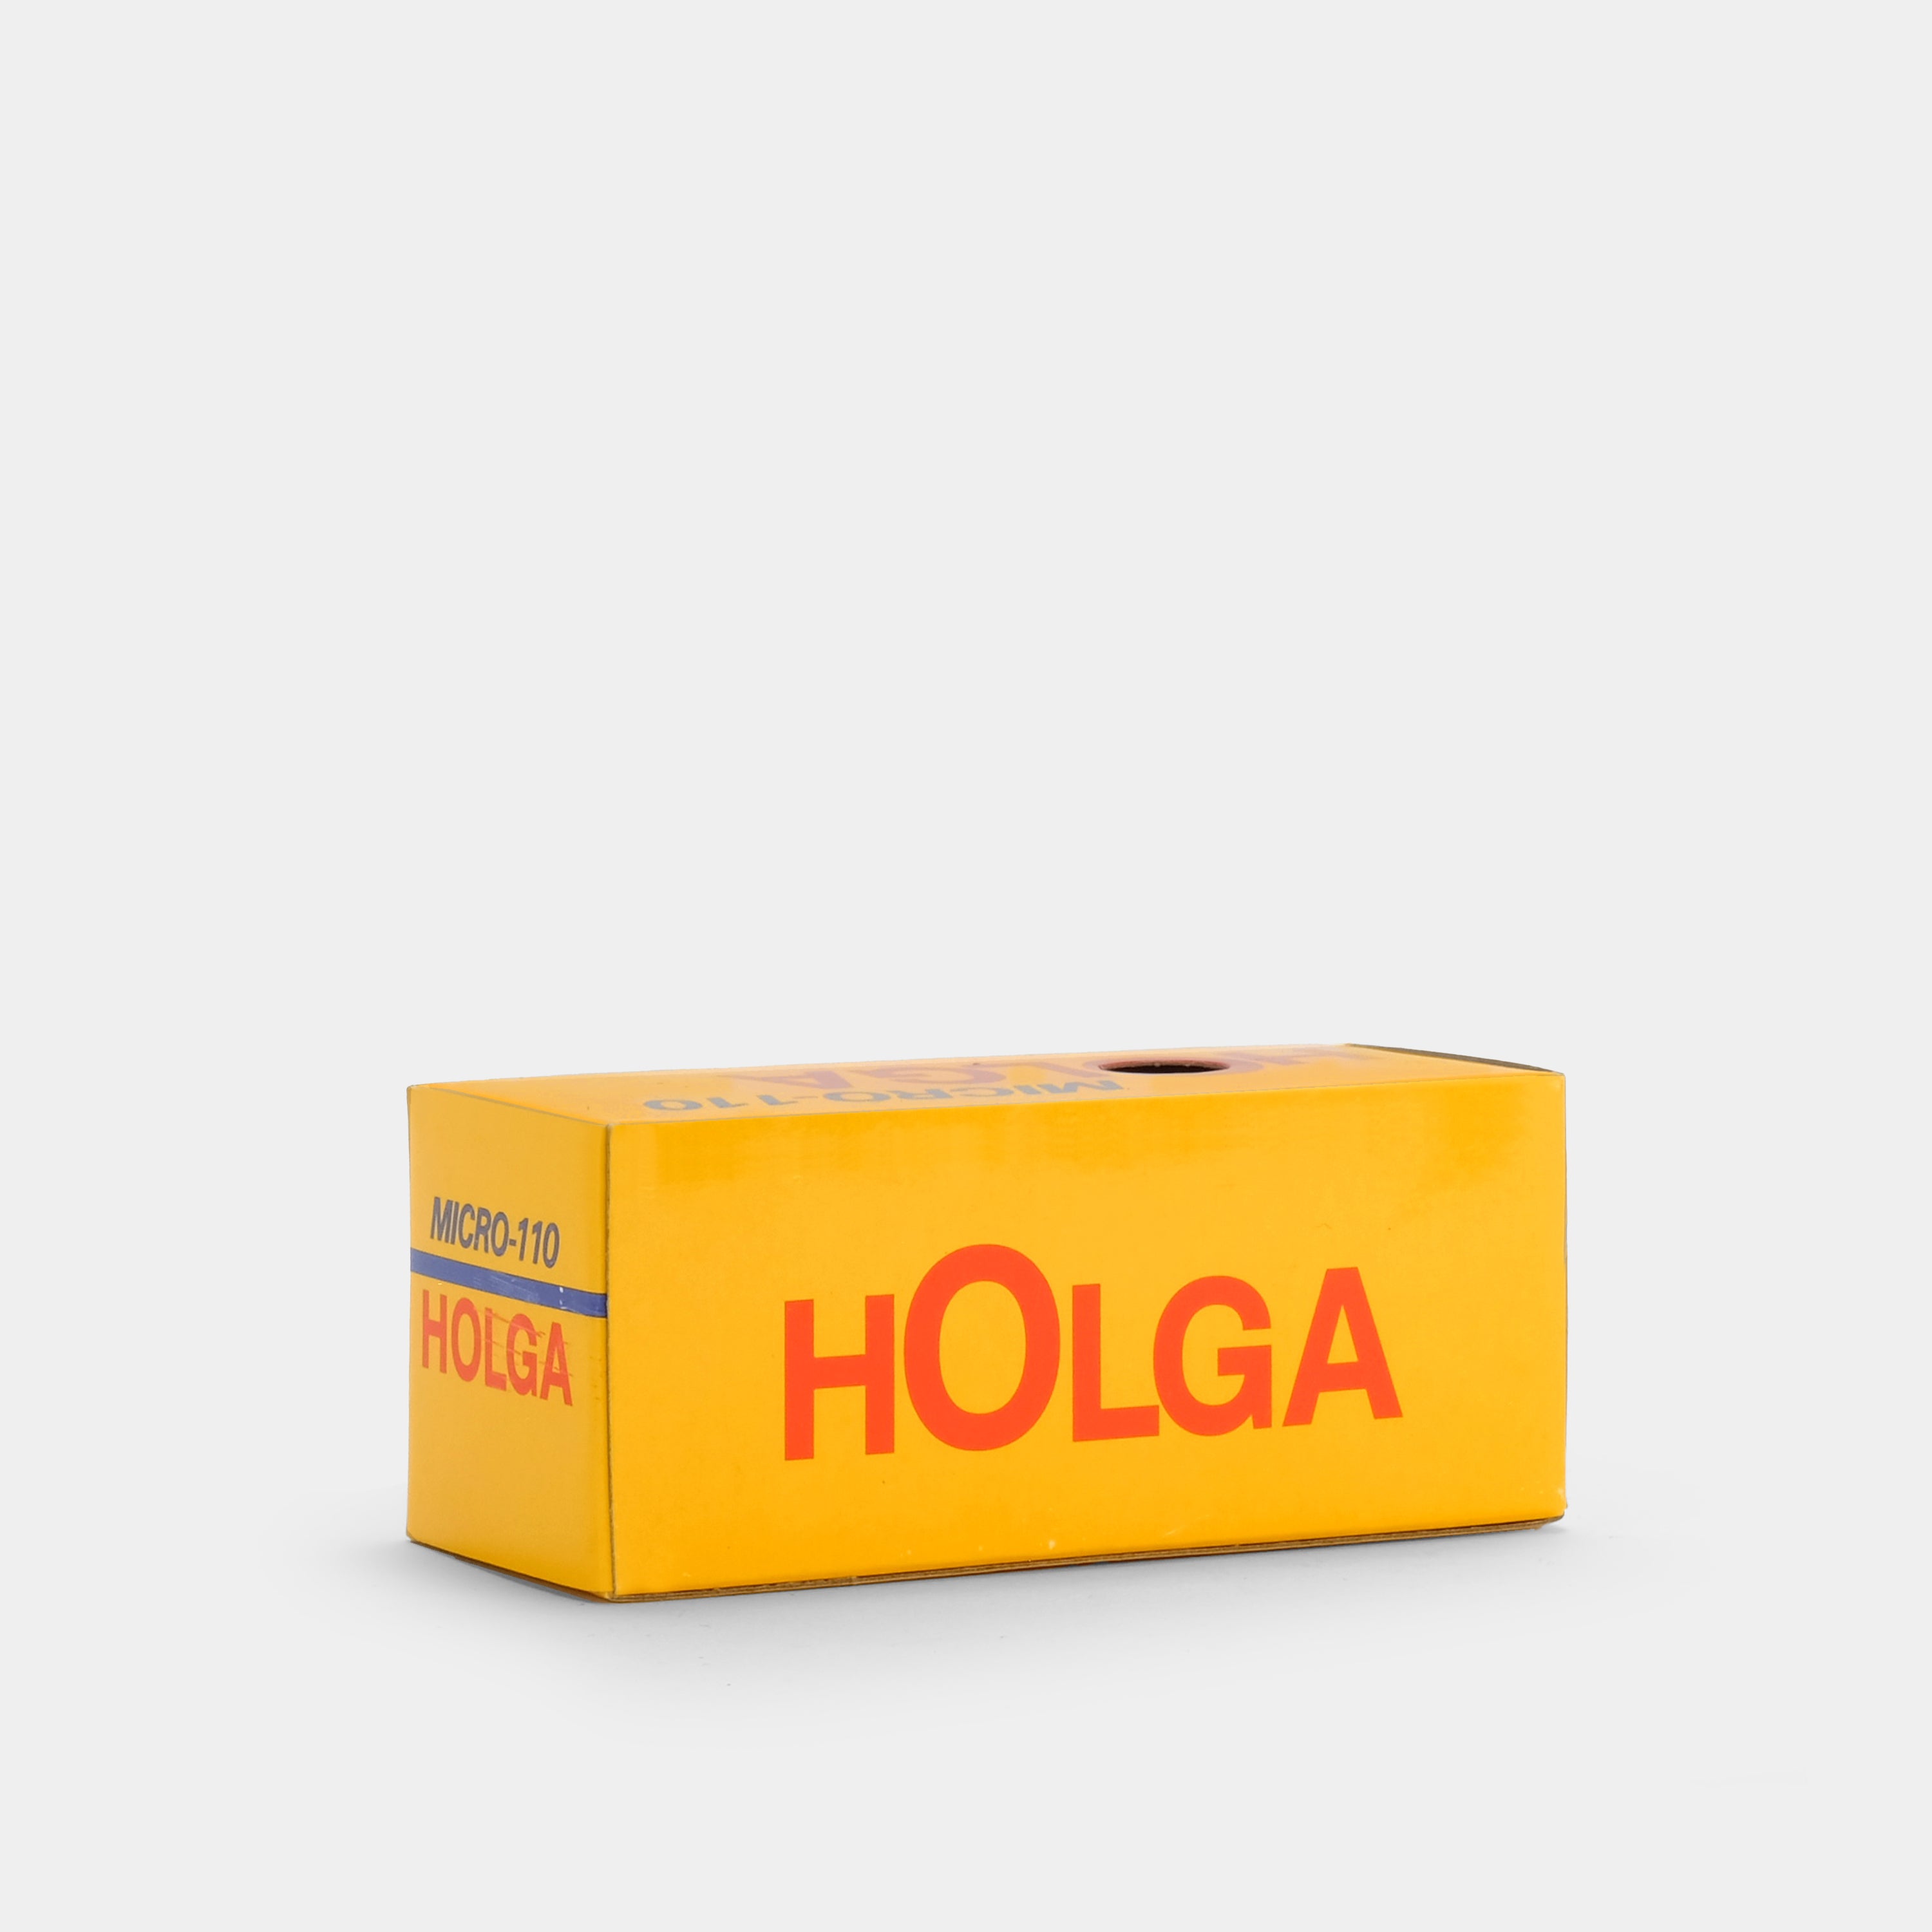 Holga Micro-110 Red 110 Format Film Camera